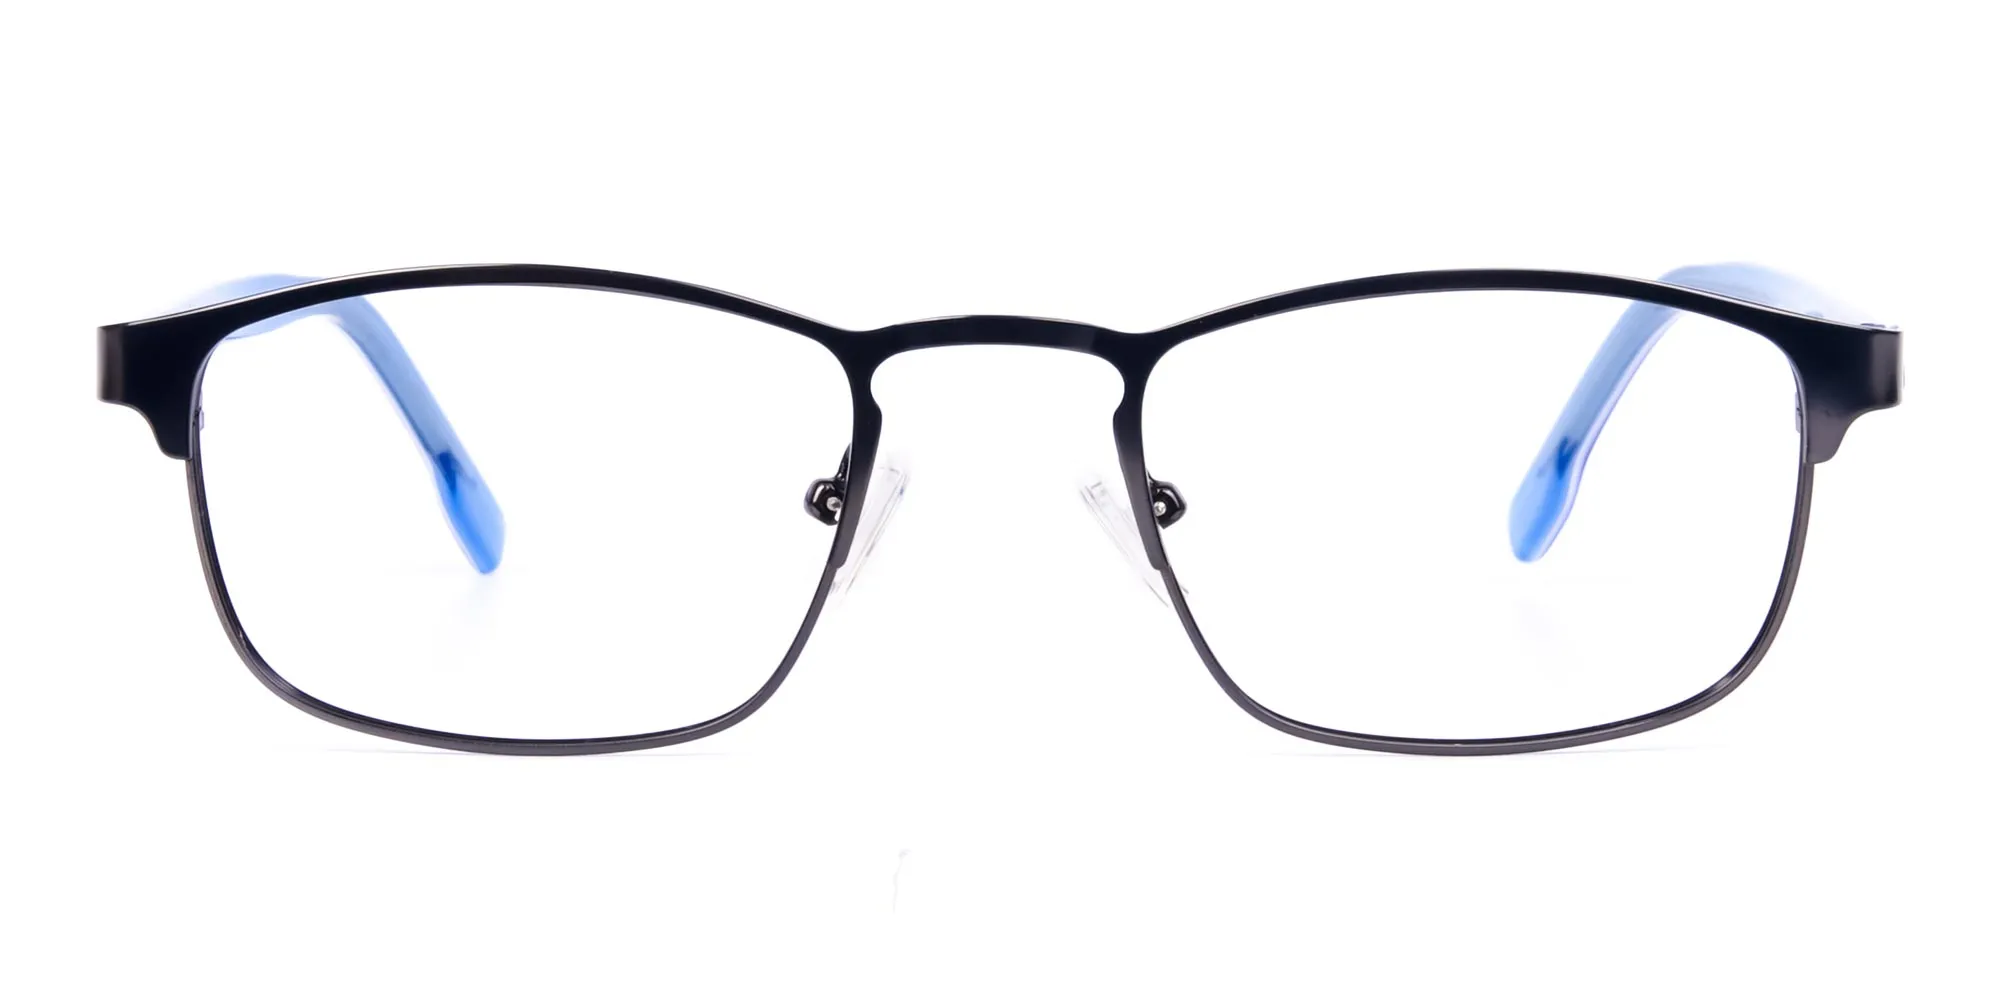 titanium glasses frames online-2